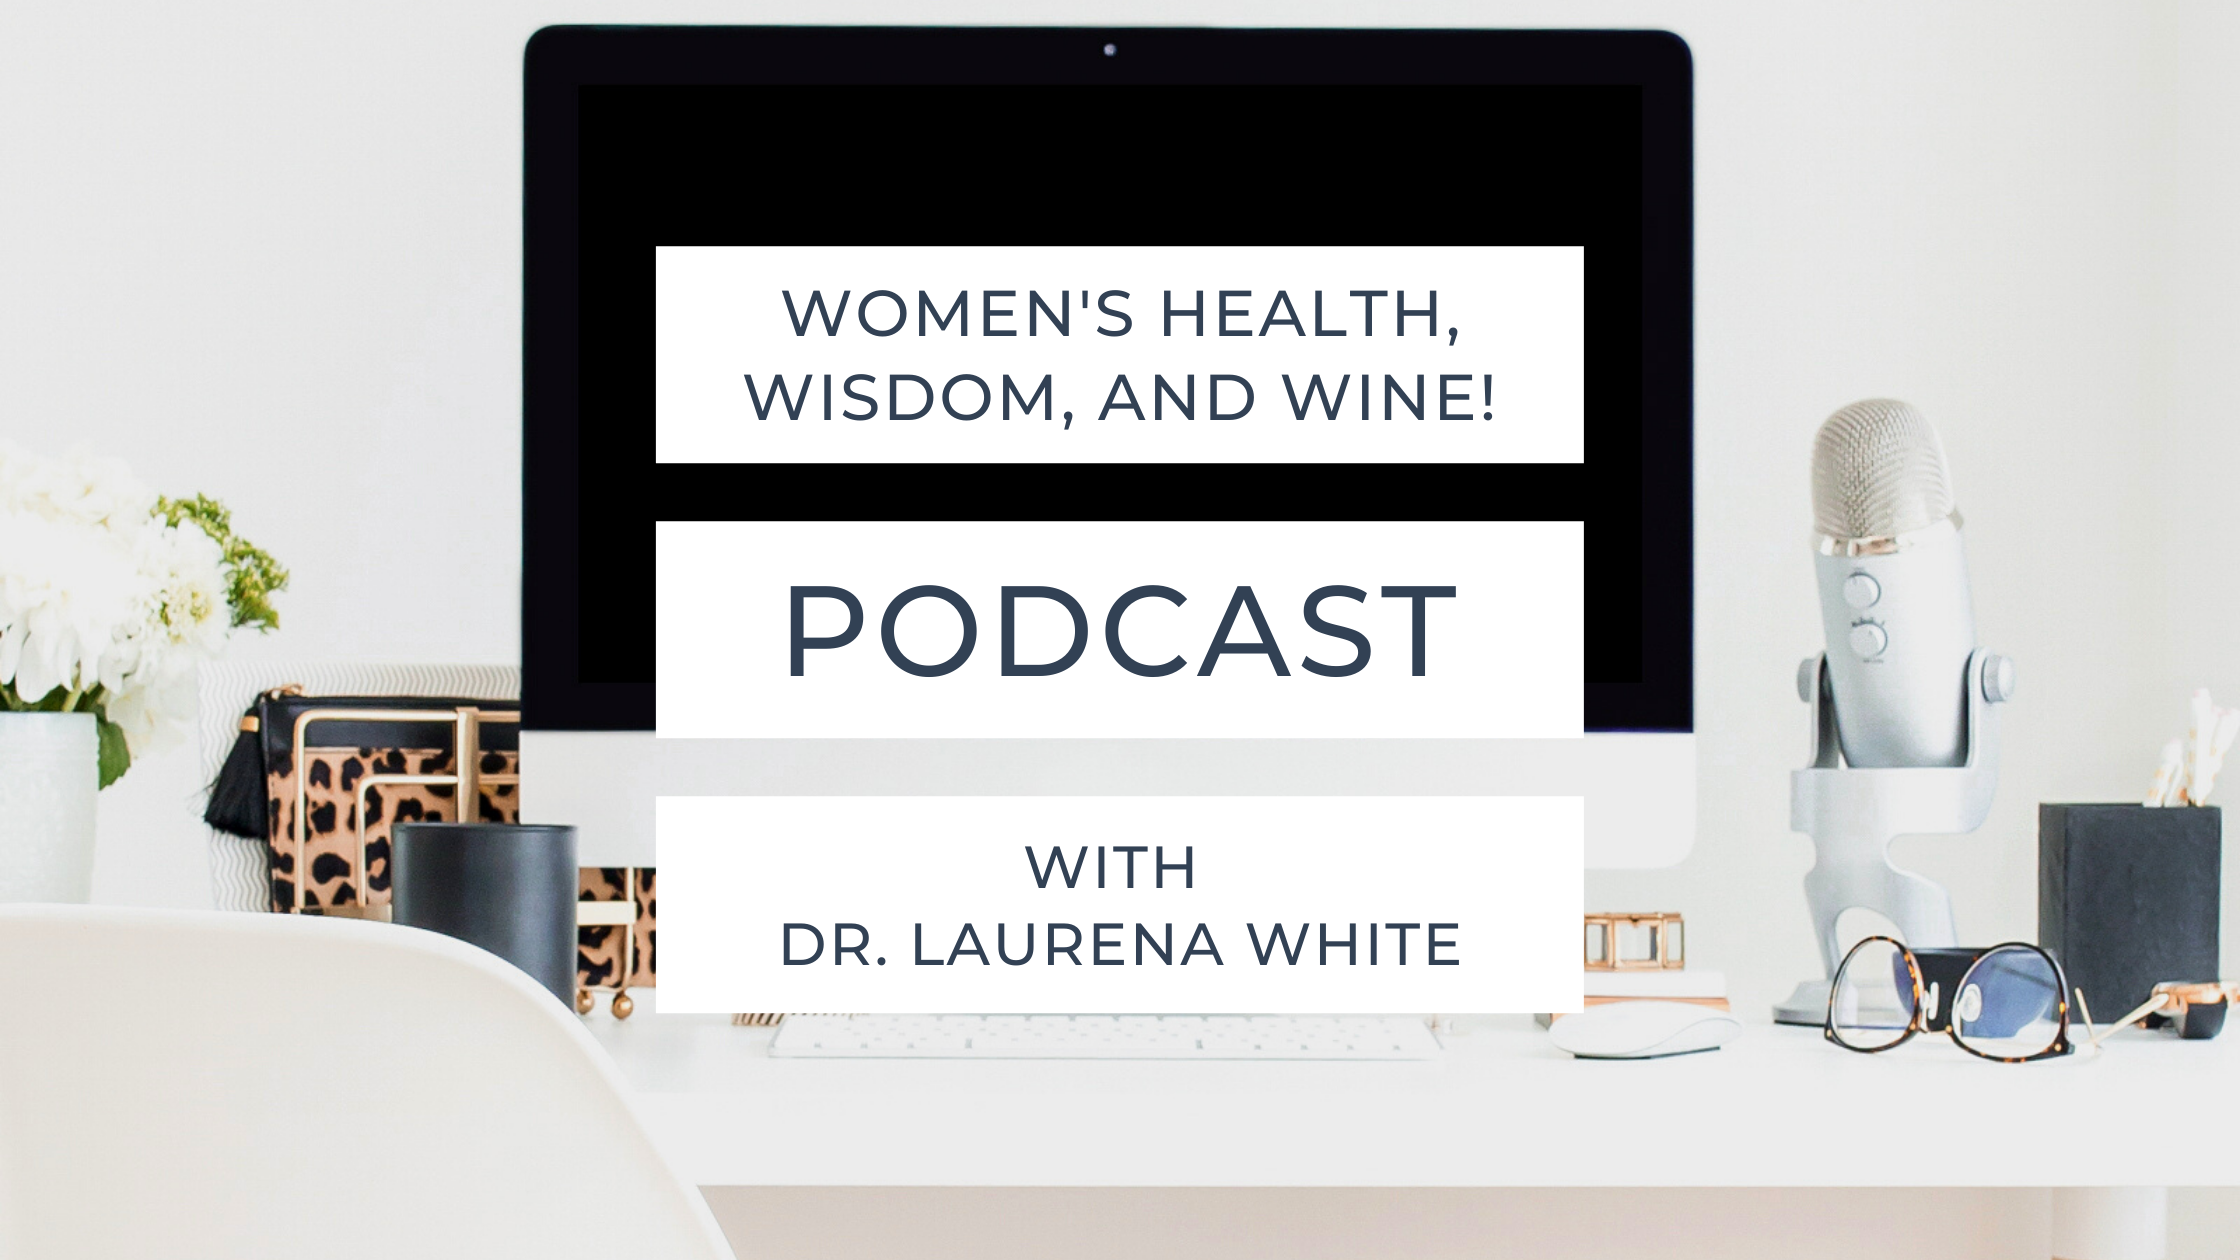 Women's health, wisdom, and wine